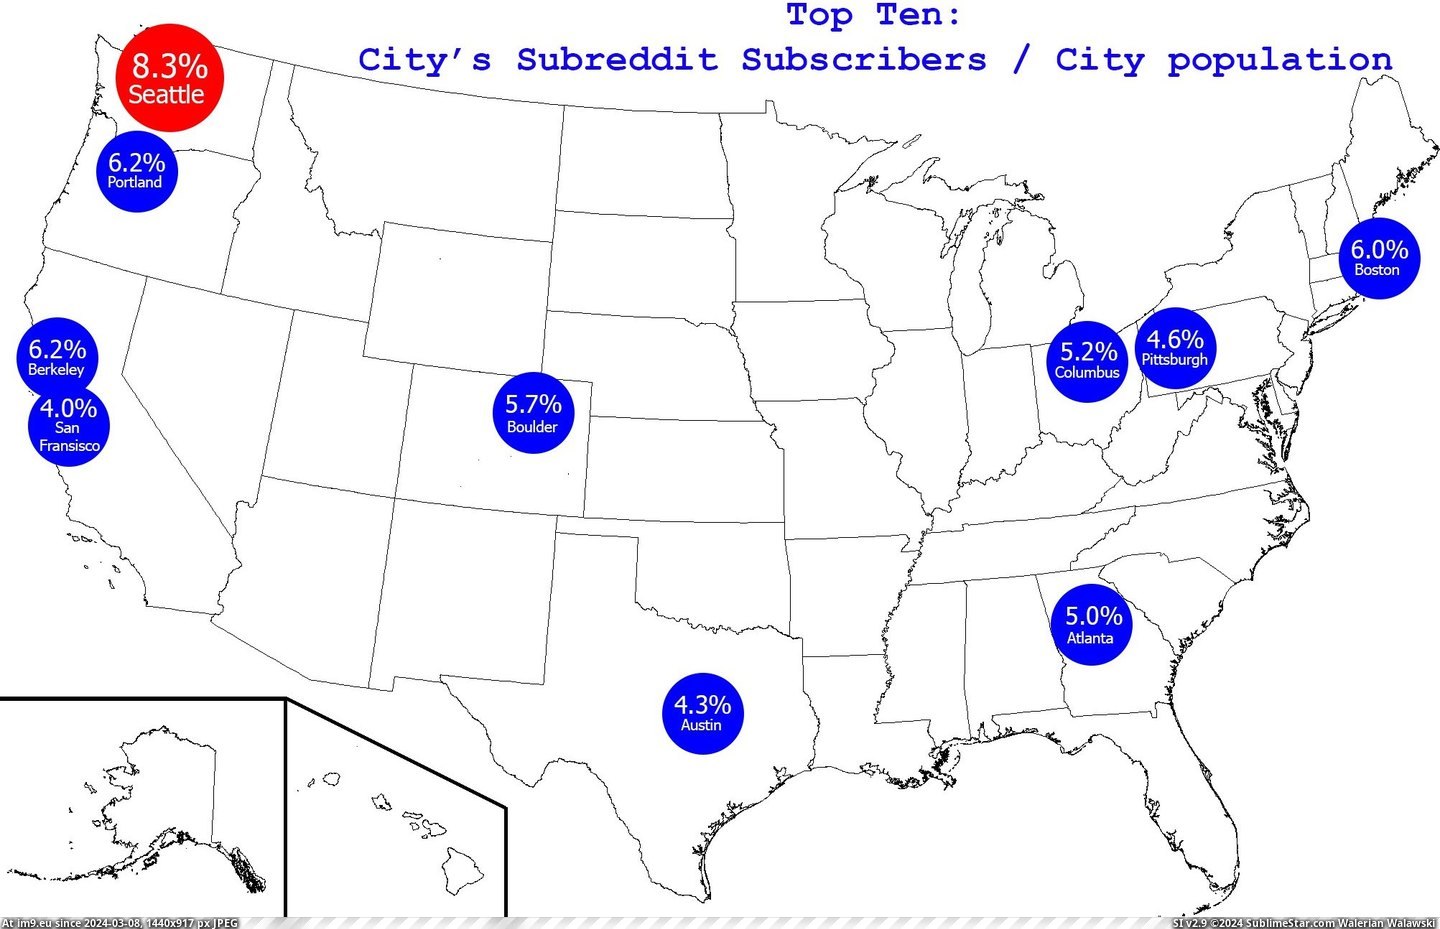 #City #Data #Subscribed #Population [Dataisbeautiful] How Much of a City's Population is Subscribed to Its Subreddit (More data in comments) [OC] Pic. (Bild von album My r/DATAISBEAUTIFUL favs))